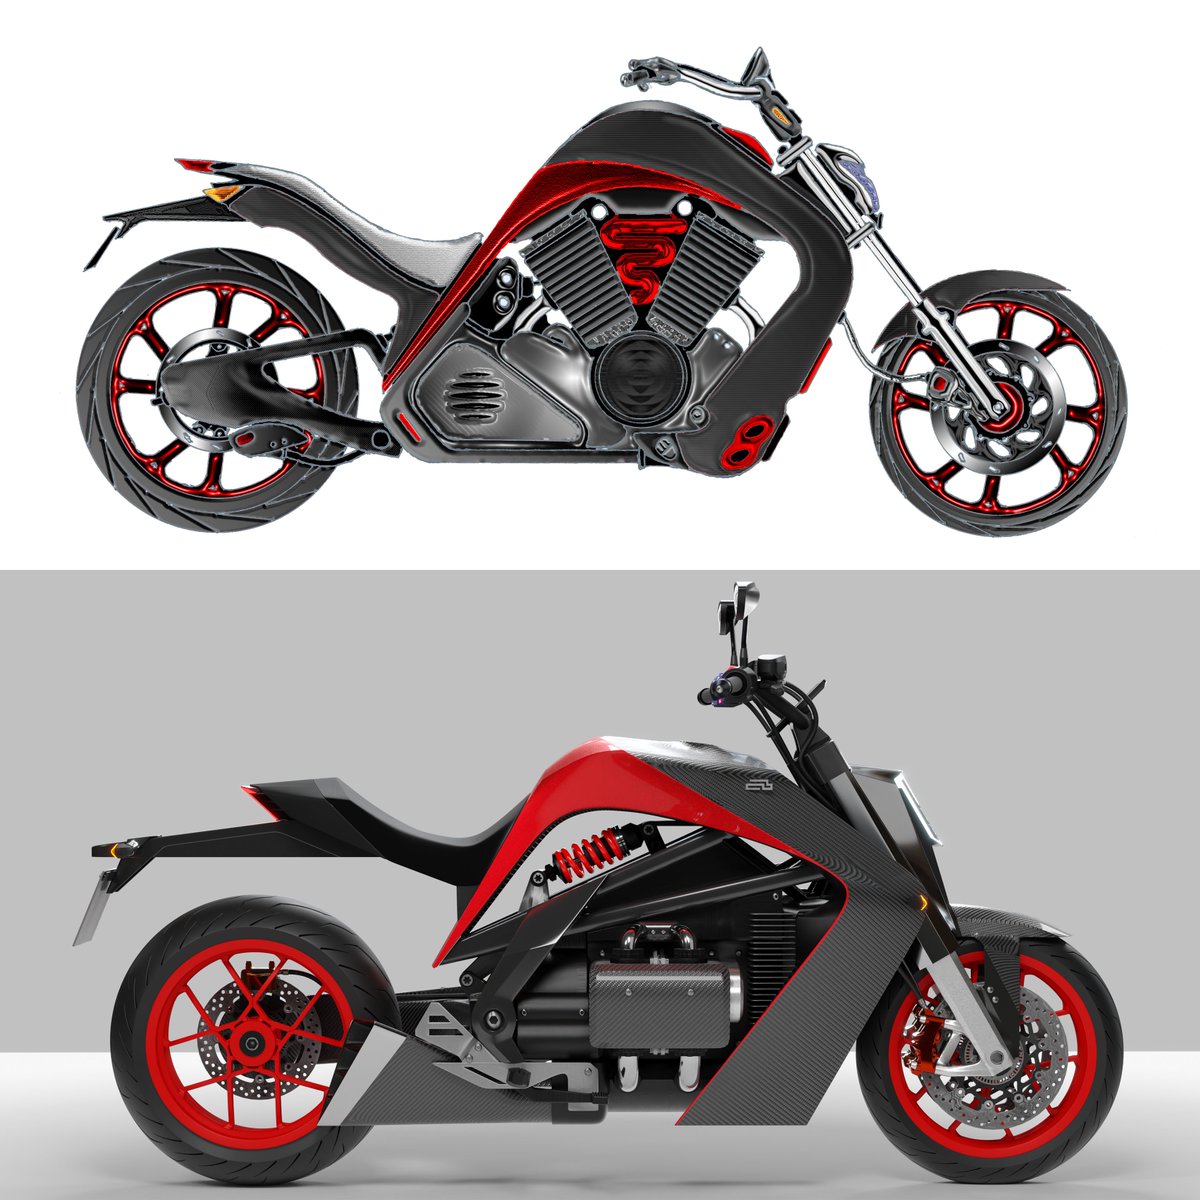 2D to 3D...

#nftdropalert #nftcommunity #nftart #nftmusic #nftgaming #nftfashion #digitalart #nftcollector #cryptoart #nftartist #3d #3dmodeling #motorcycle #motorcyclelife #motorcycles #design #motorcycleart